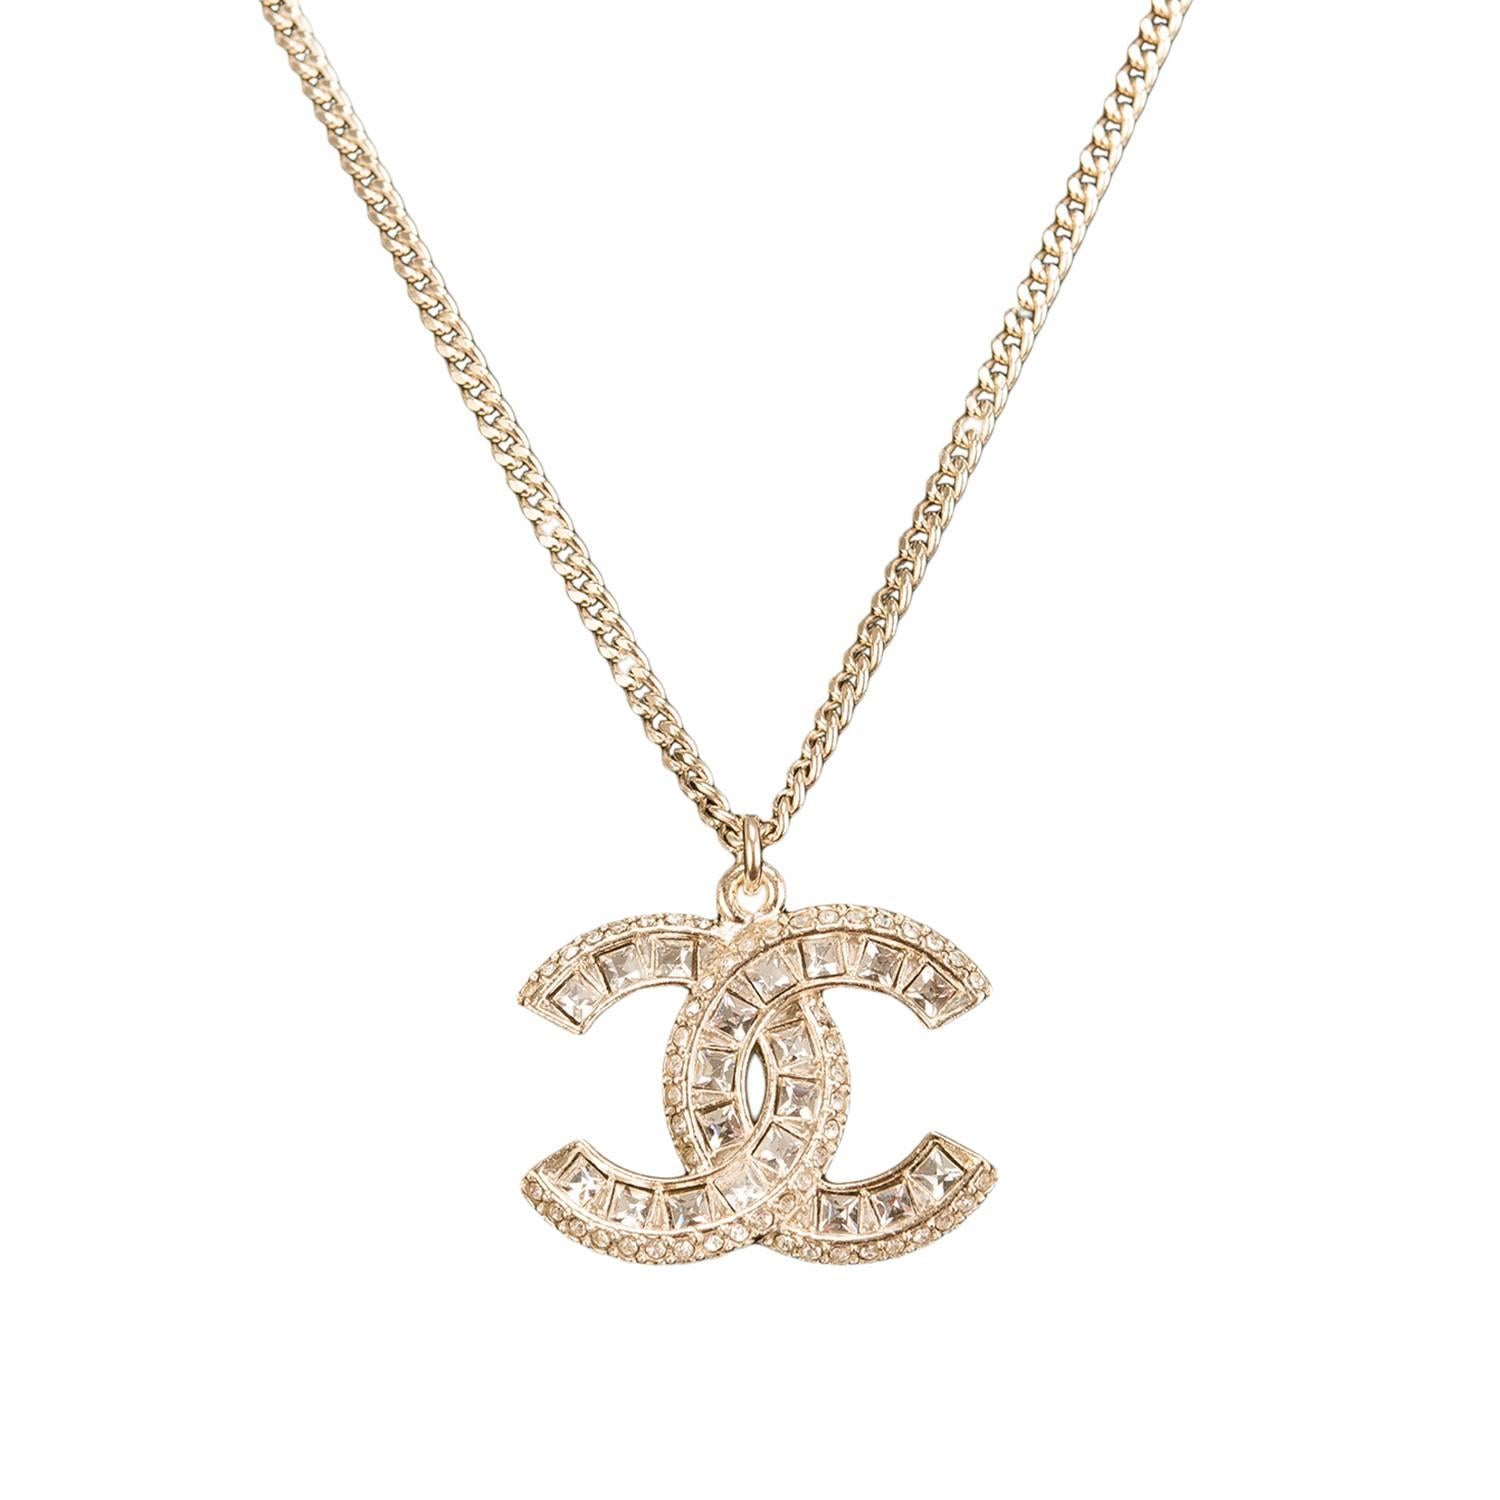 Chanel Swarovski Crystal Logo Pendant Necklace